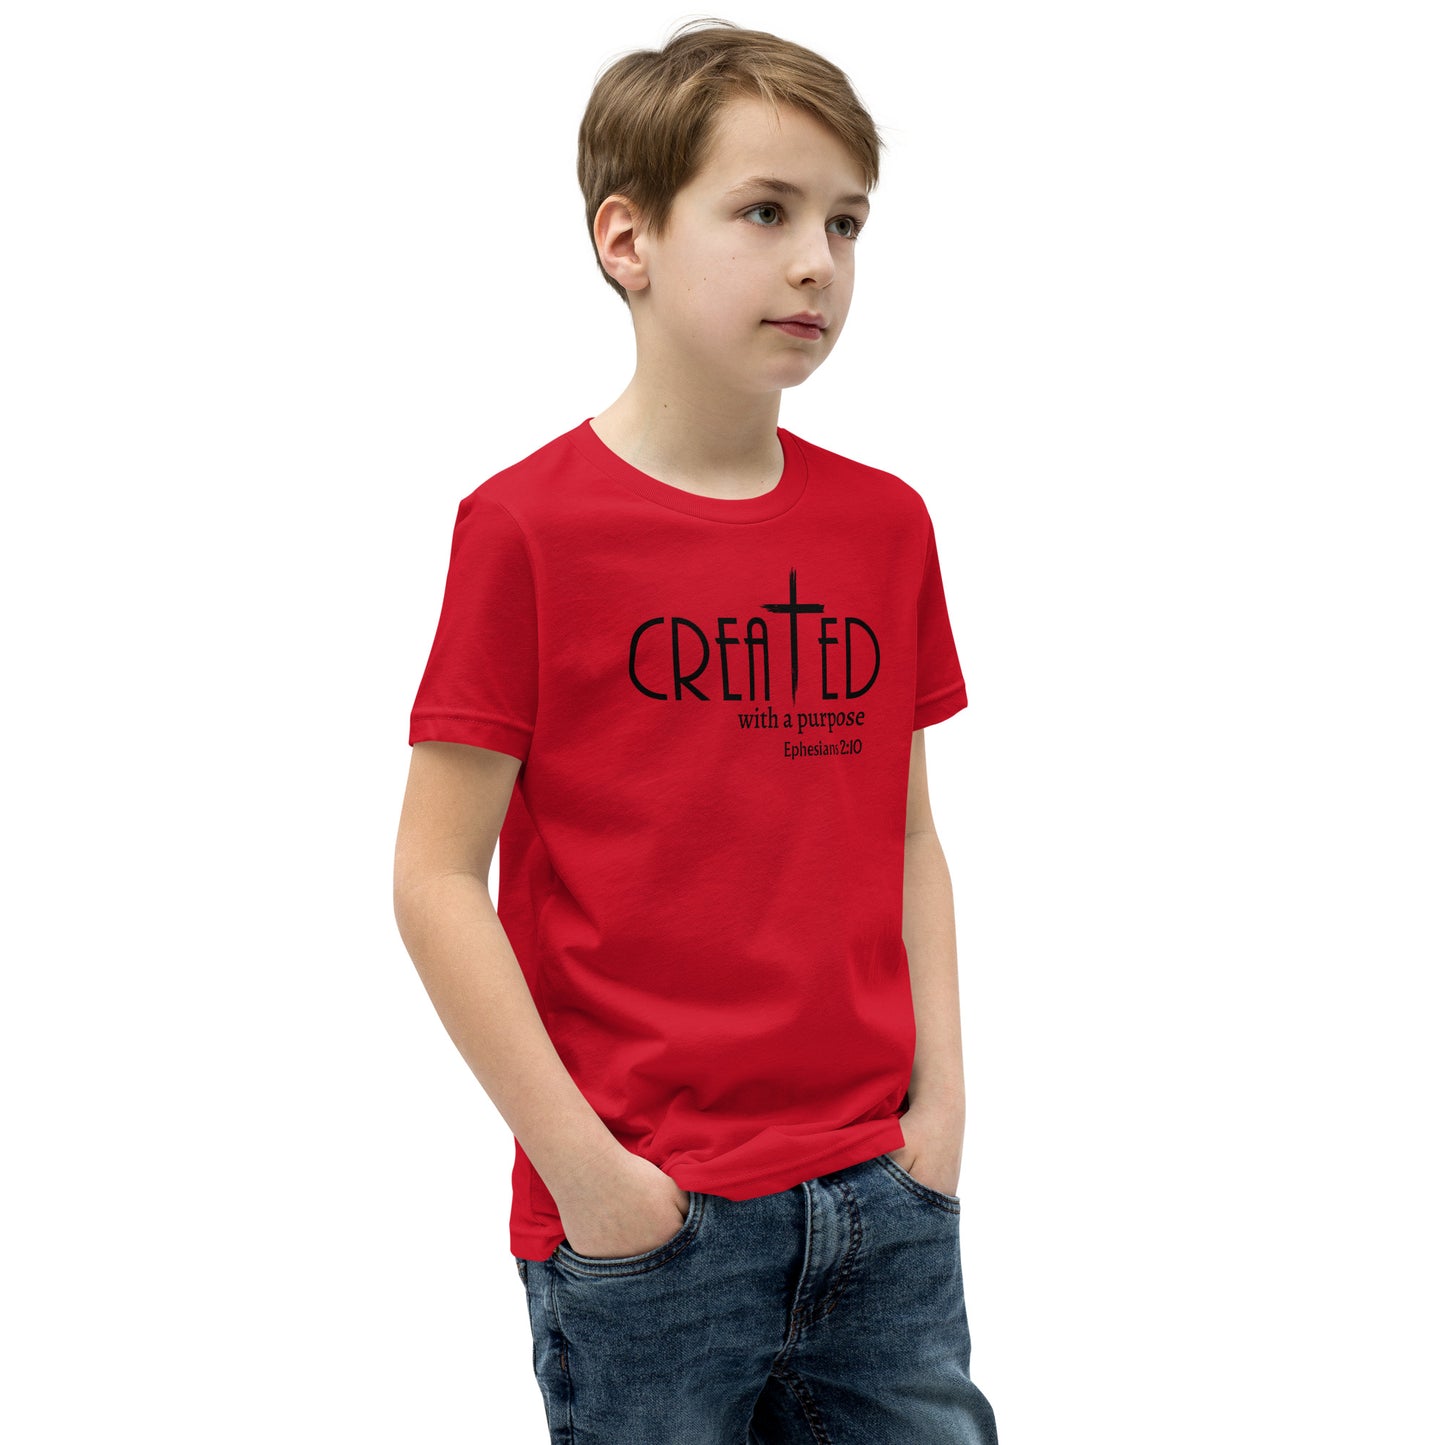 Created Youth Short Sleeve T-Shirt